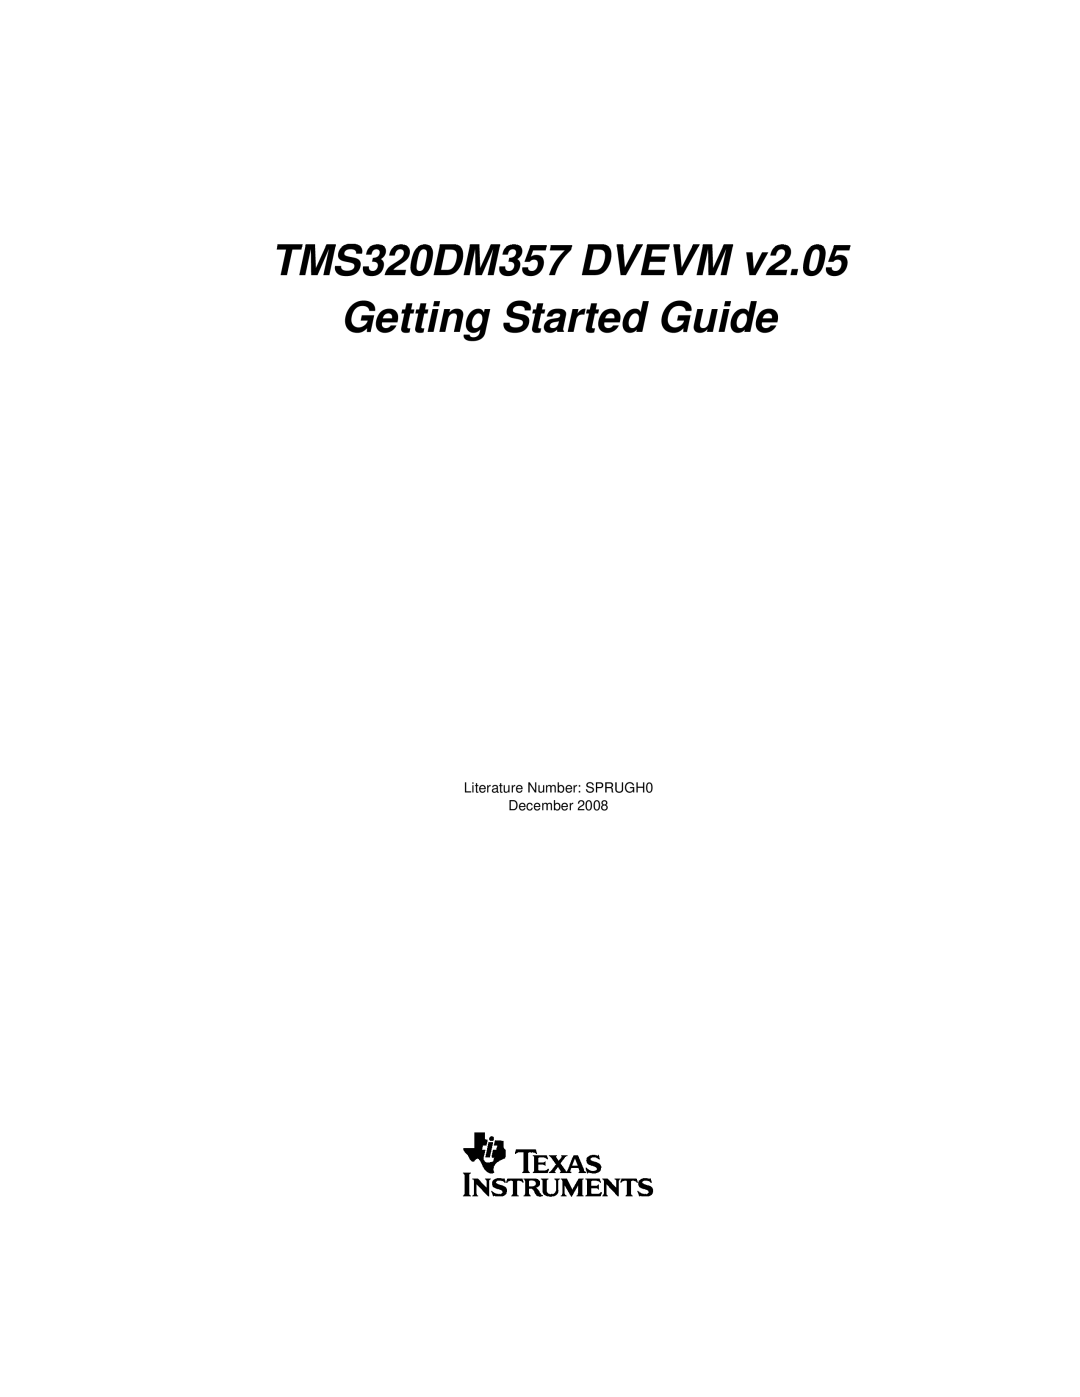 Texas Instruments TMS320DM357 DVEVM v2.05 manual TMS320DM357 DVEVM Getting Started Guide 